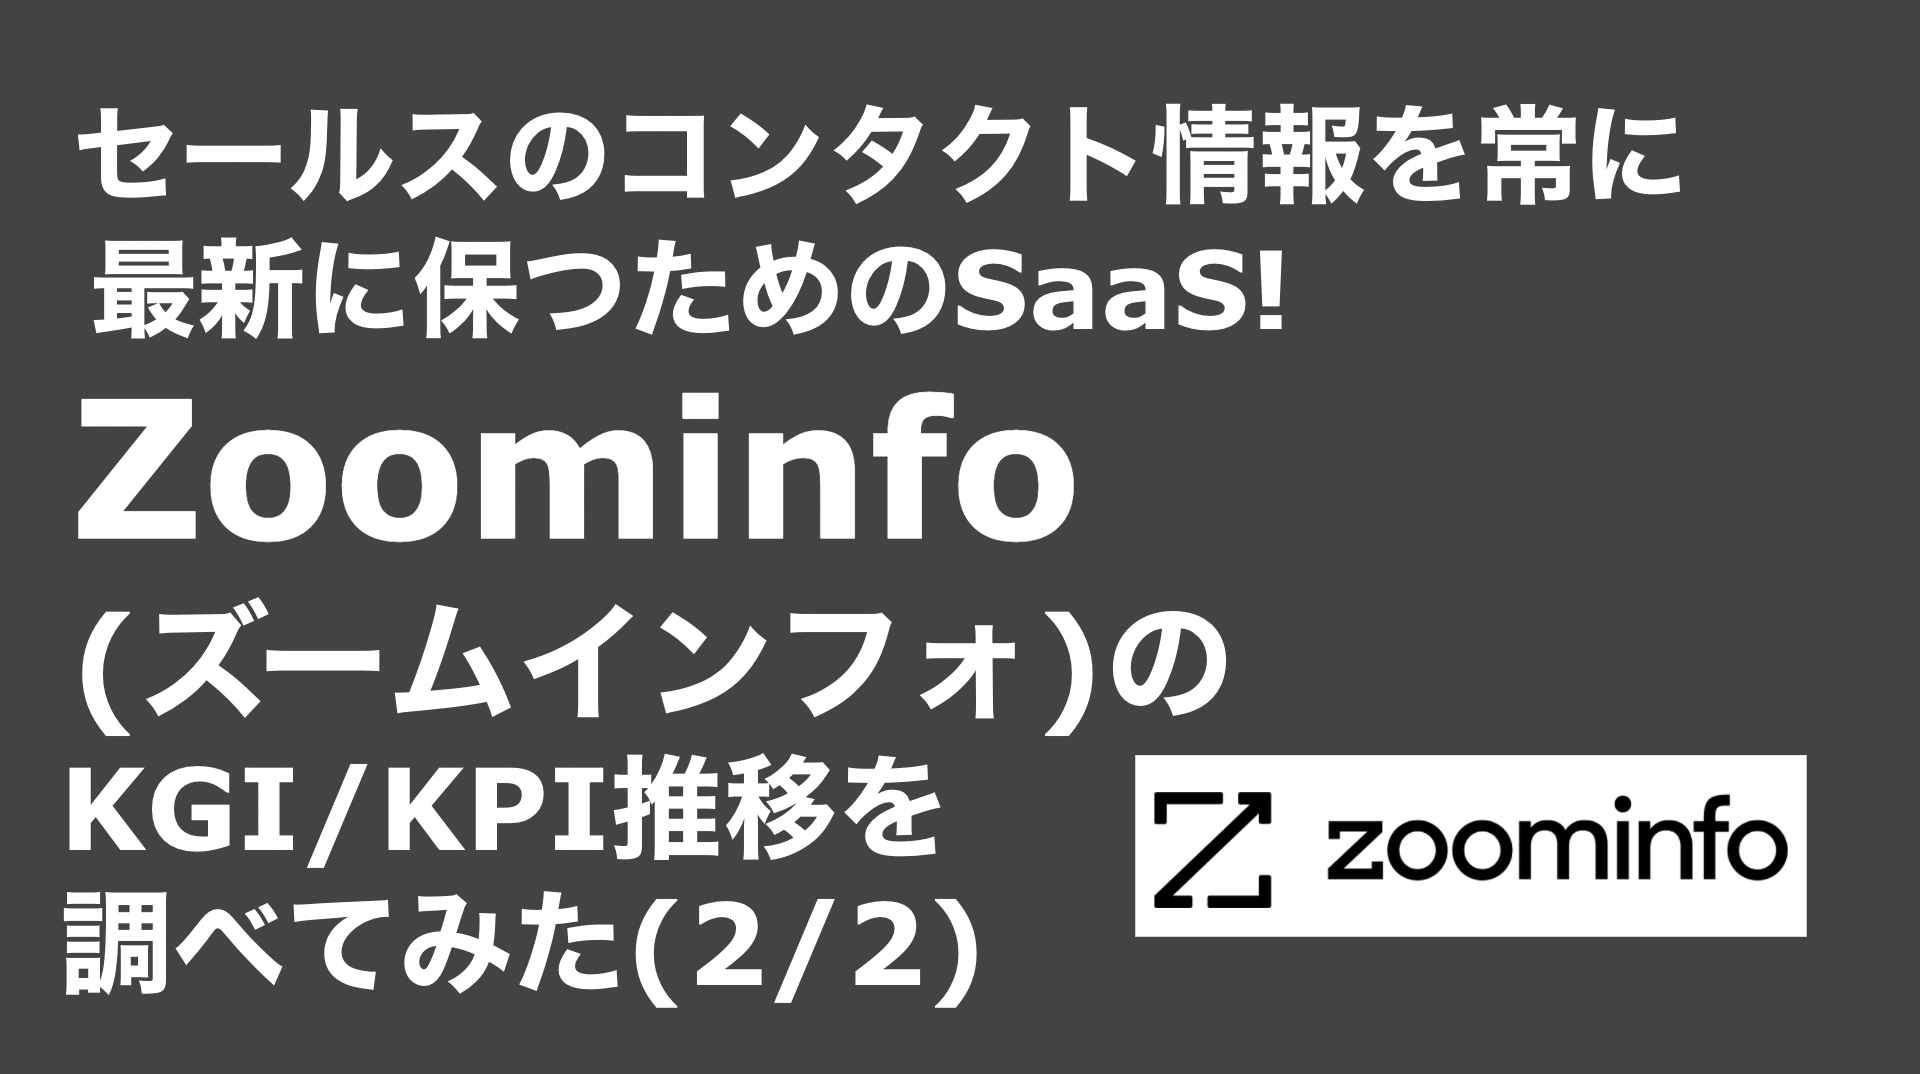 saaslife_ セールスのコンタクト情報を常に最新に保つためのSaaS!Zoominfo(ズームインフォ)のKGI/KPI推移を調べてみた(2/2)